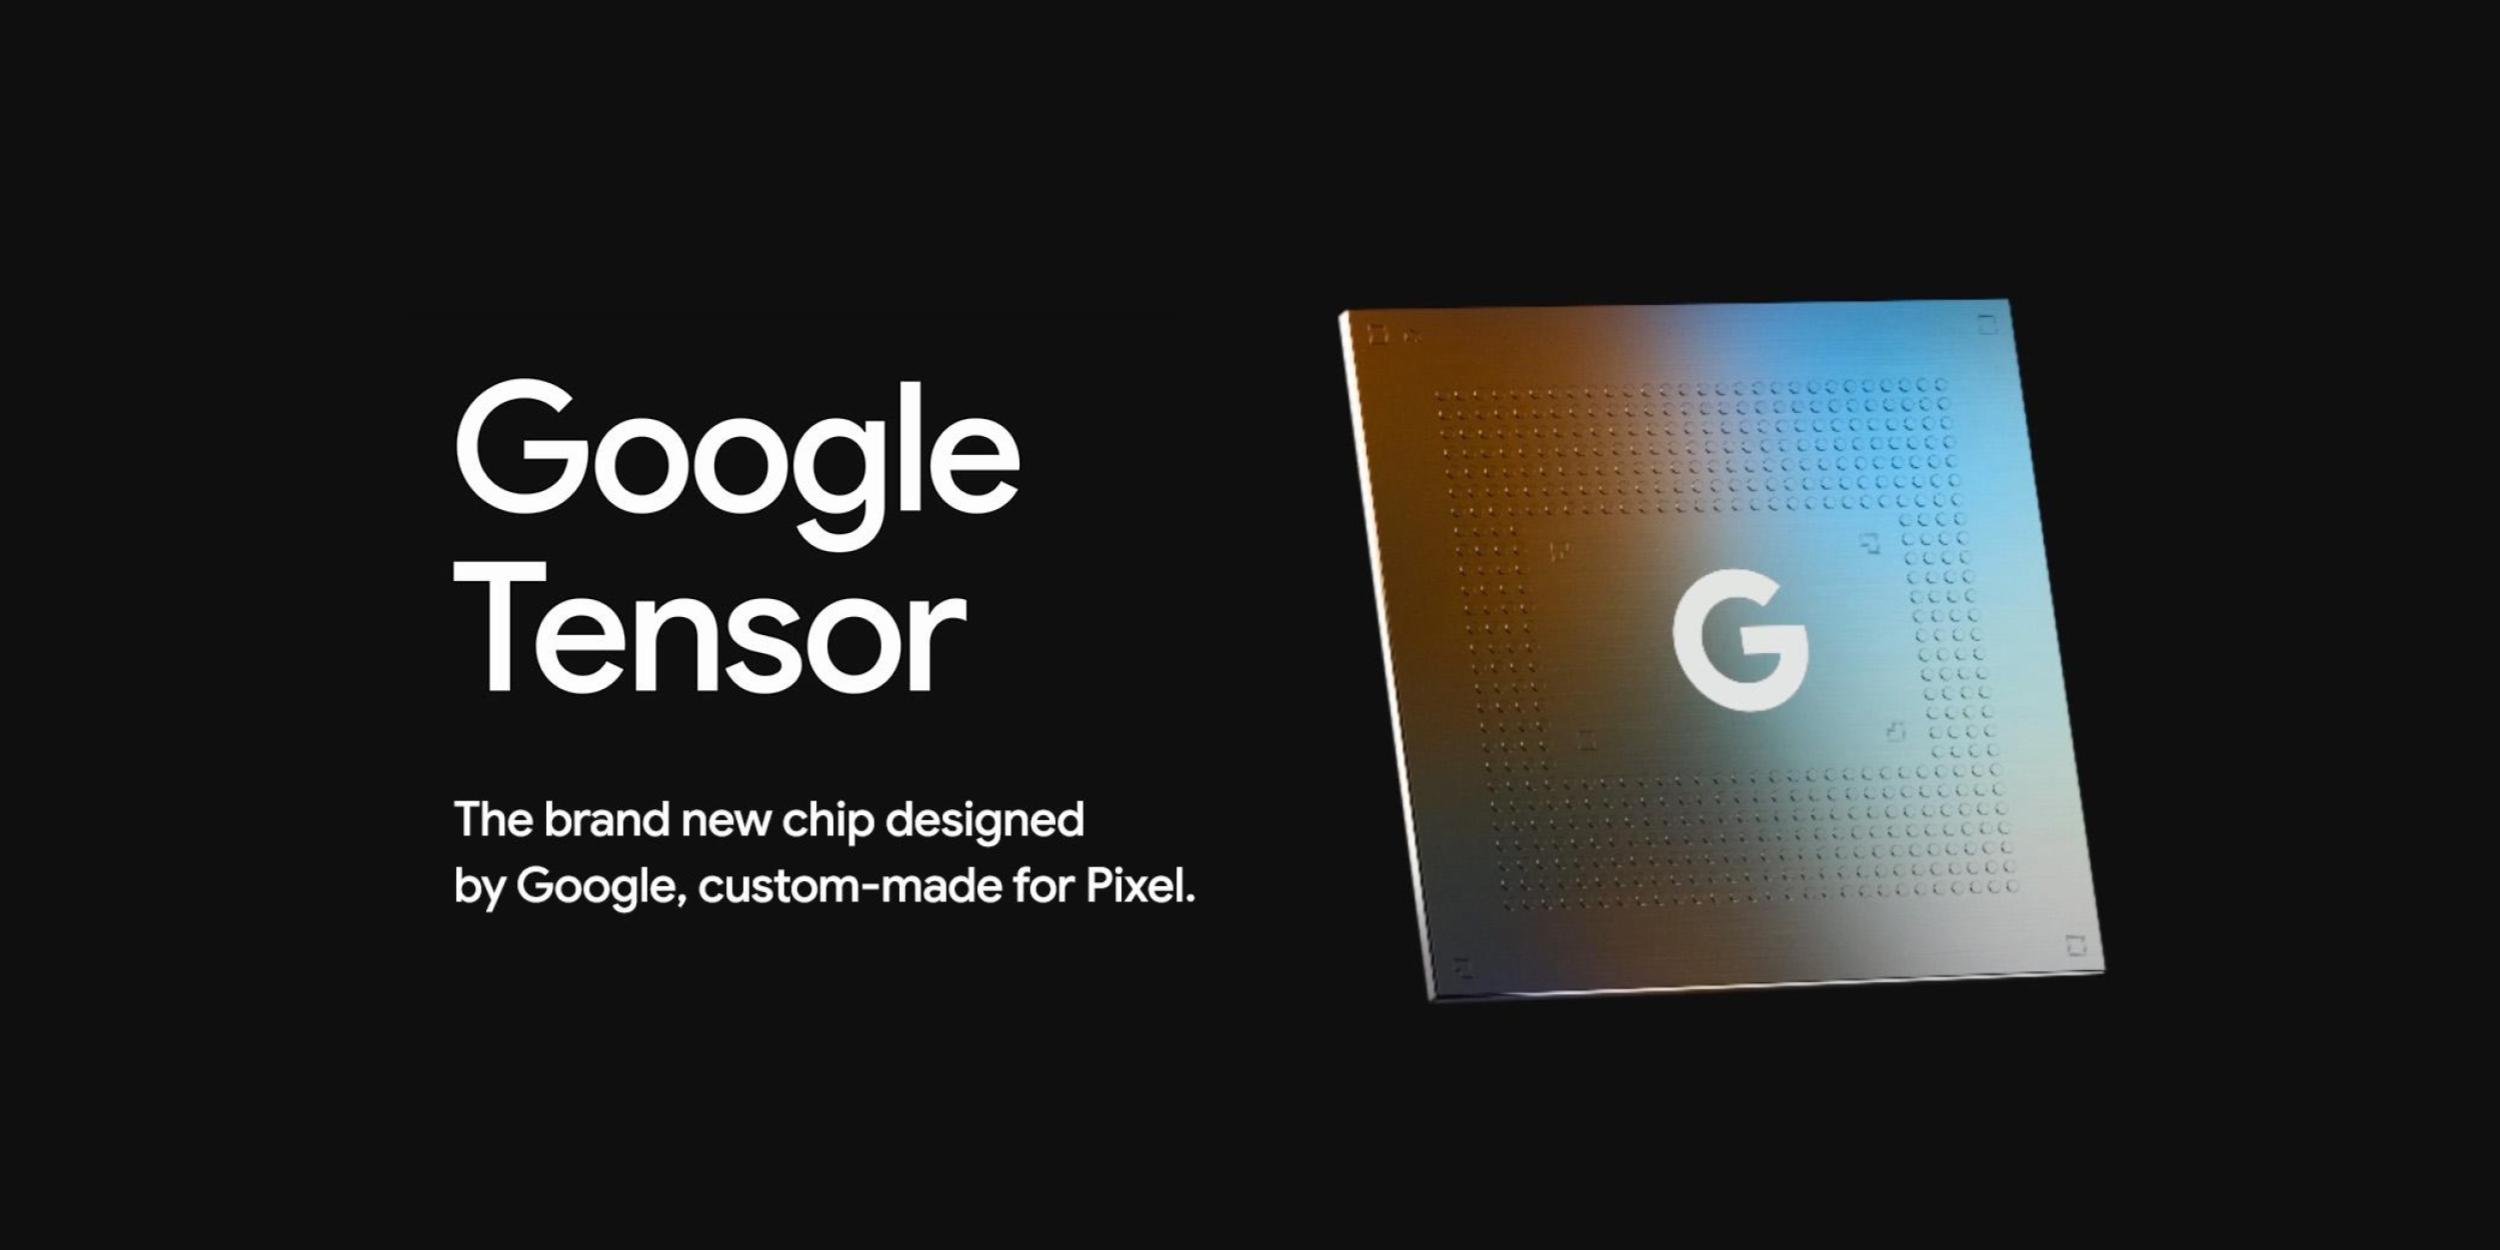 Insider: Google is already working on second generation Tensor processor